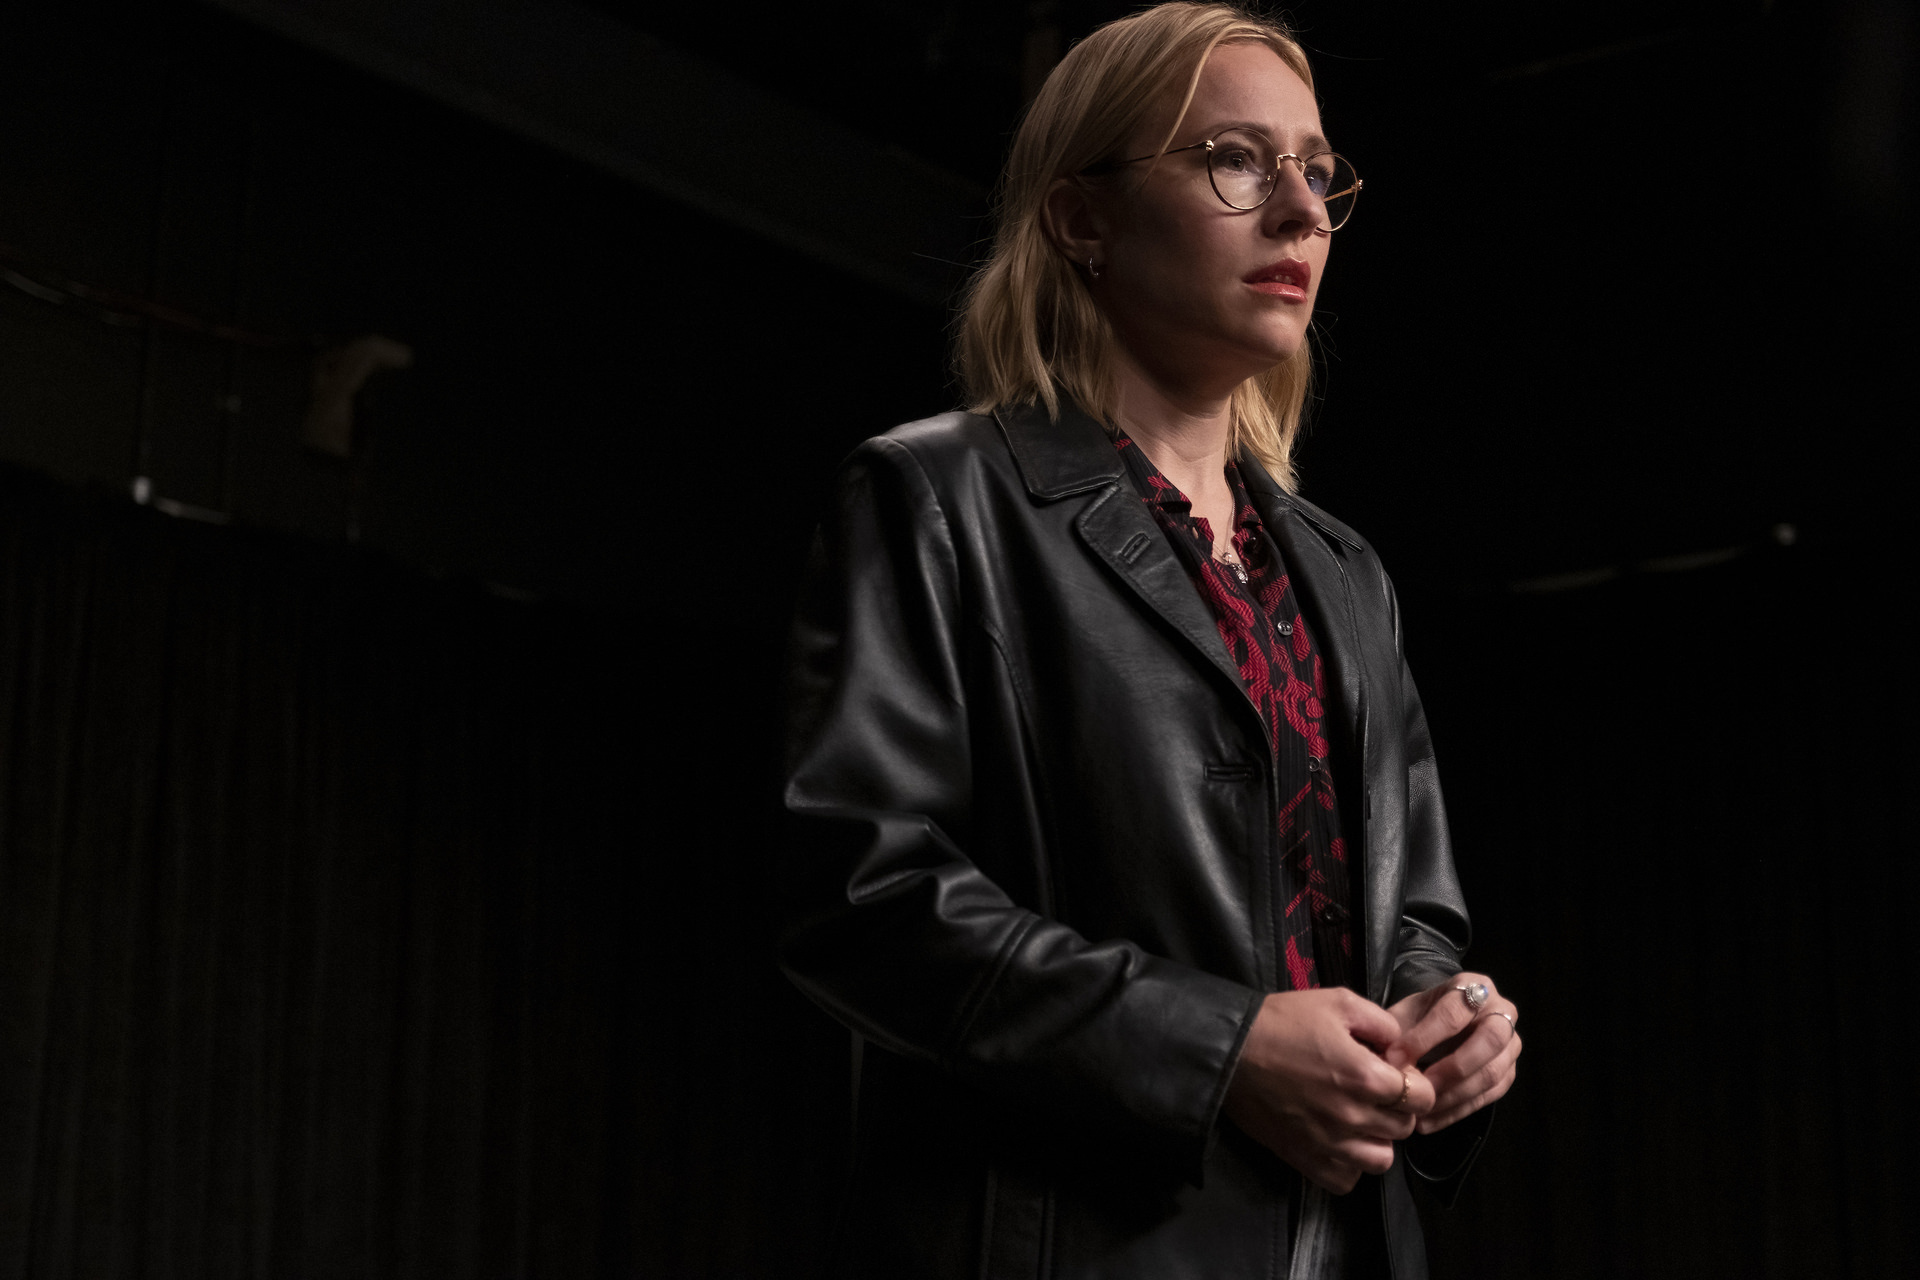 Sarah Goldberg as Sally Reed. Barry Season 4 Episode 3 Review “you're charming”. Photograph by Merrick Morton/HBO